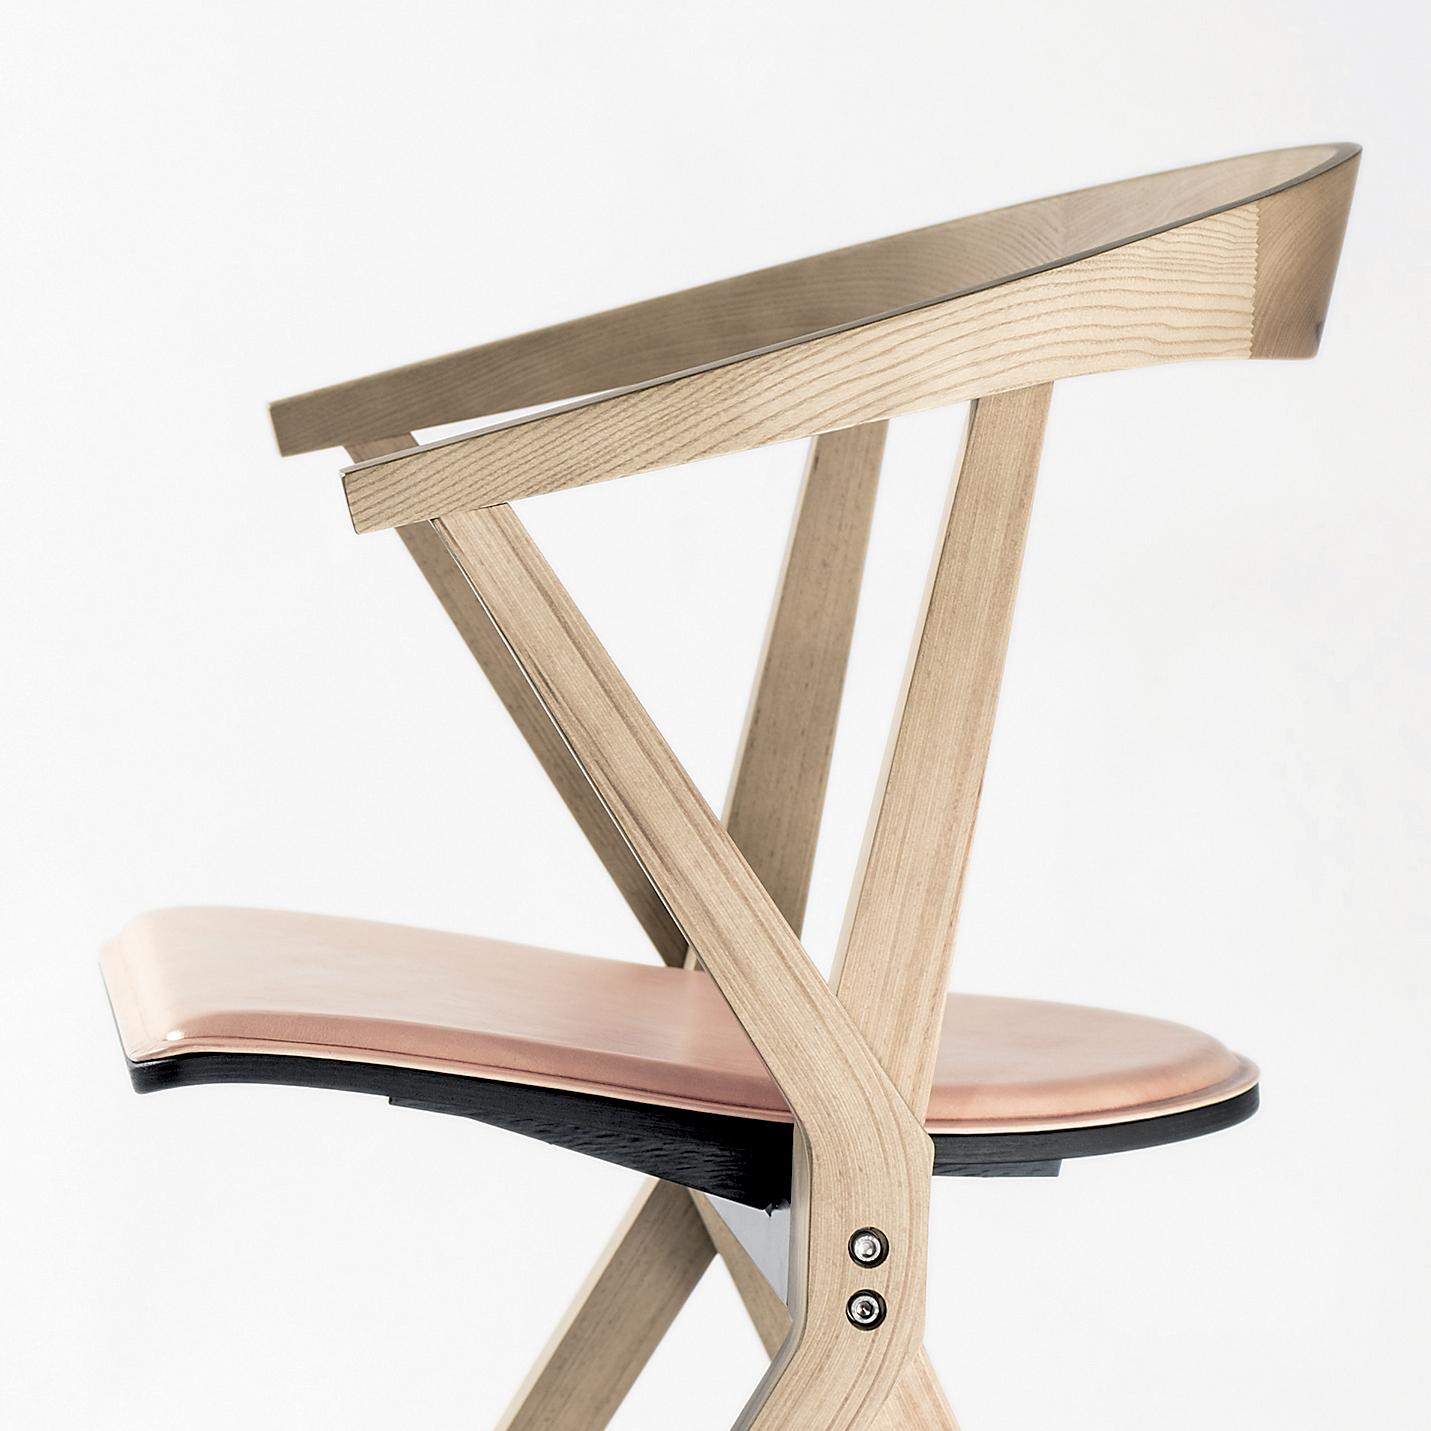 Spanish Konstantin Grcic B Chair, Leather Upholstery for BD Barcelona